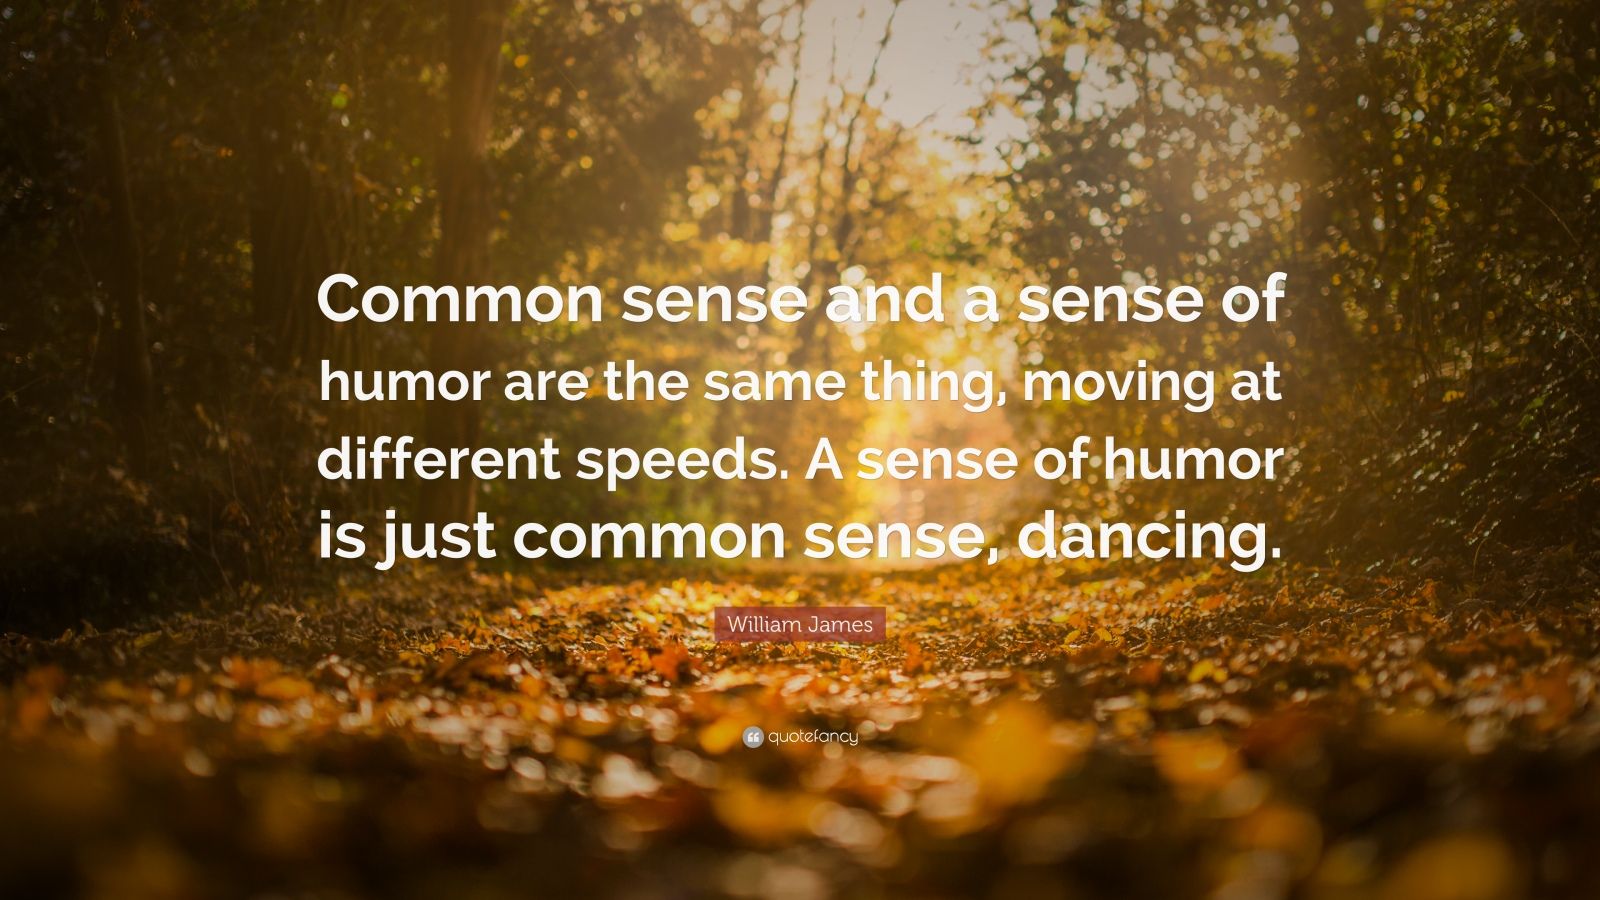 William James Quote: “Common sense and a sense of humor are the same